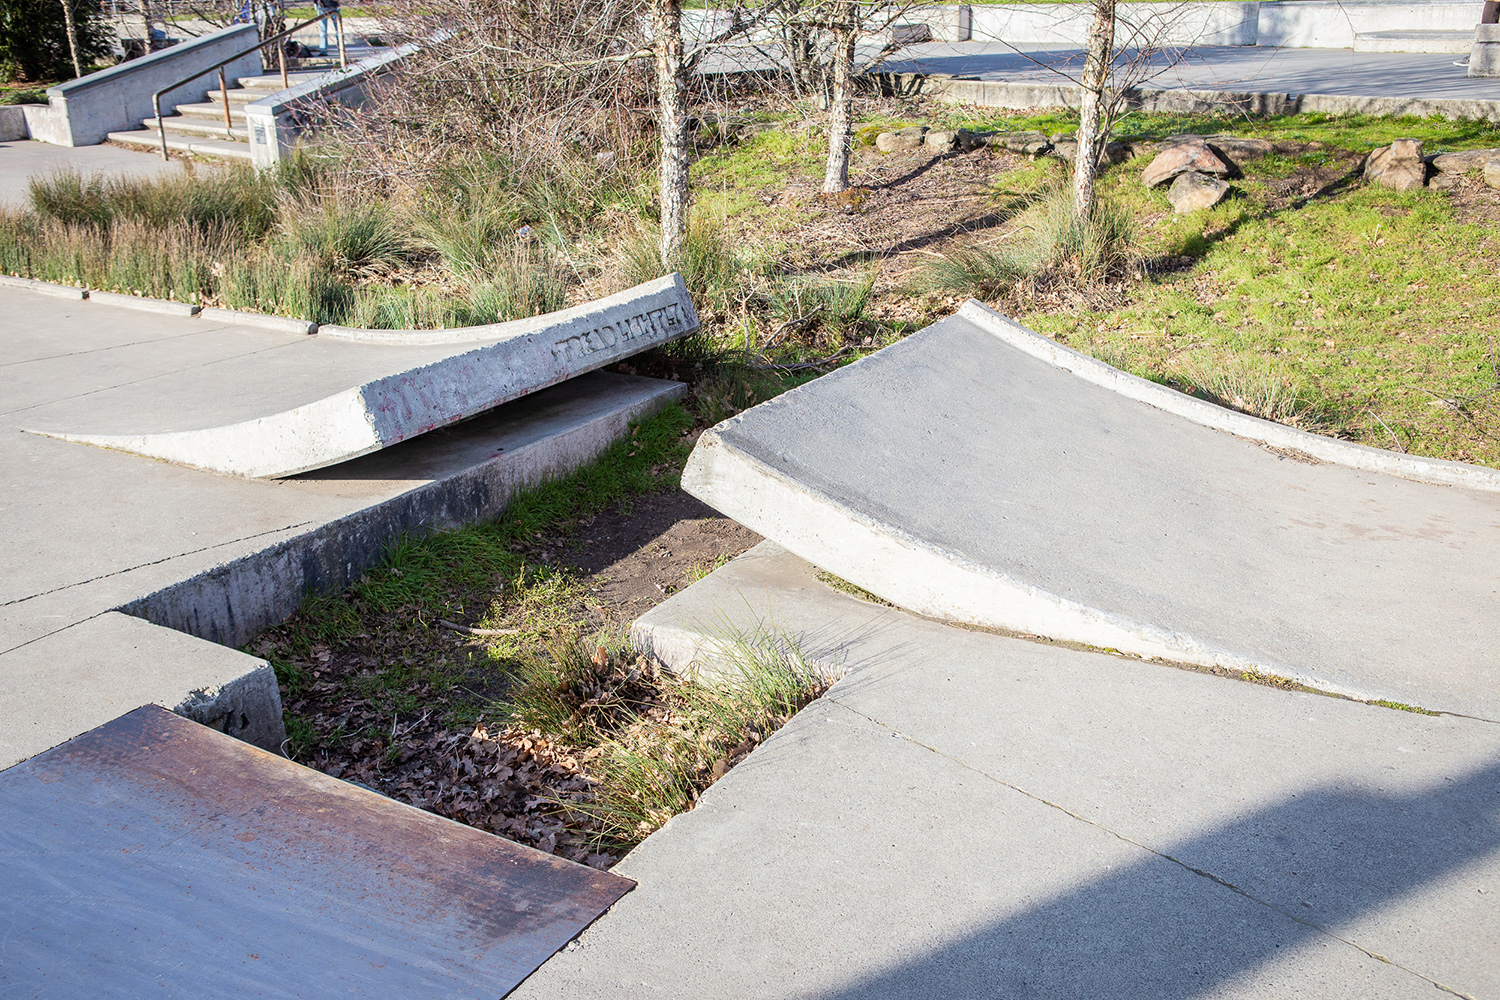  A fundamental gap jump awaits those that seek fun and progression at Ed Benedict Skate Plaza. 